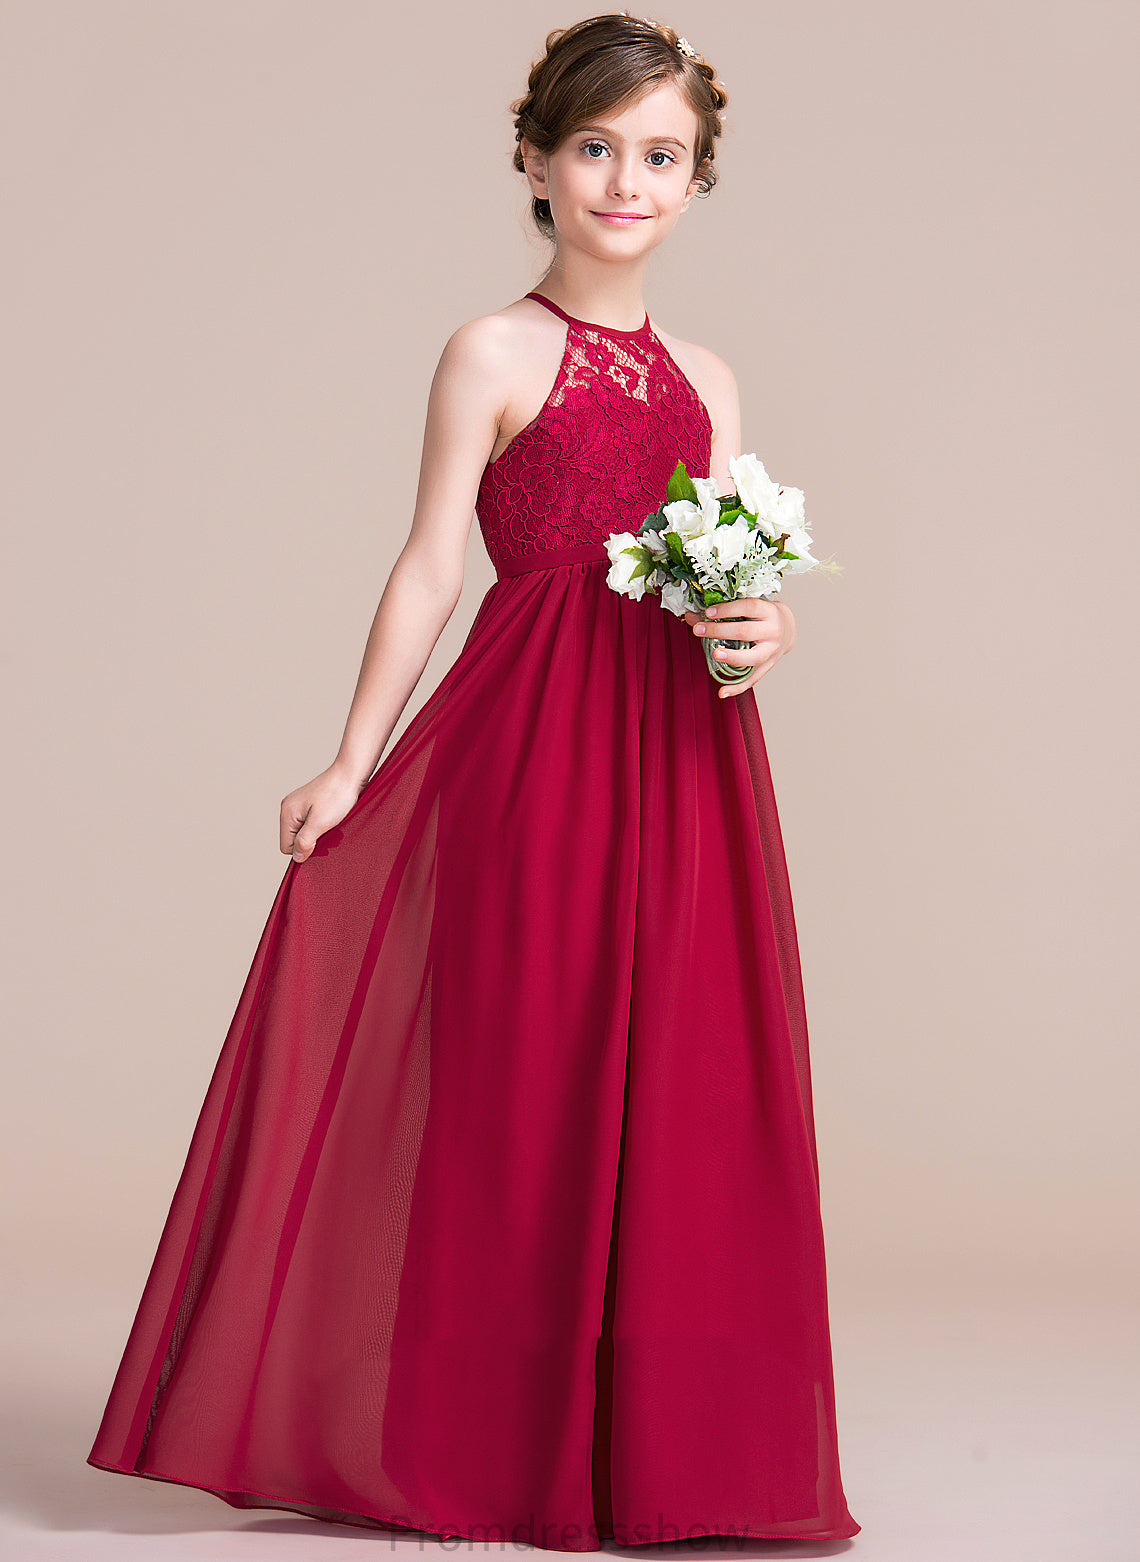 Dress Chiffon/Lace Flower Girl Dresses A-Line Girl Flower Neck - Scoop Floor-length Kaylen Sleeveless